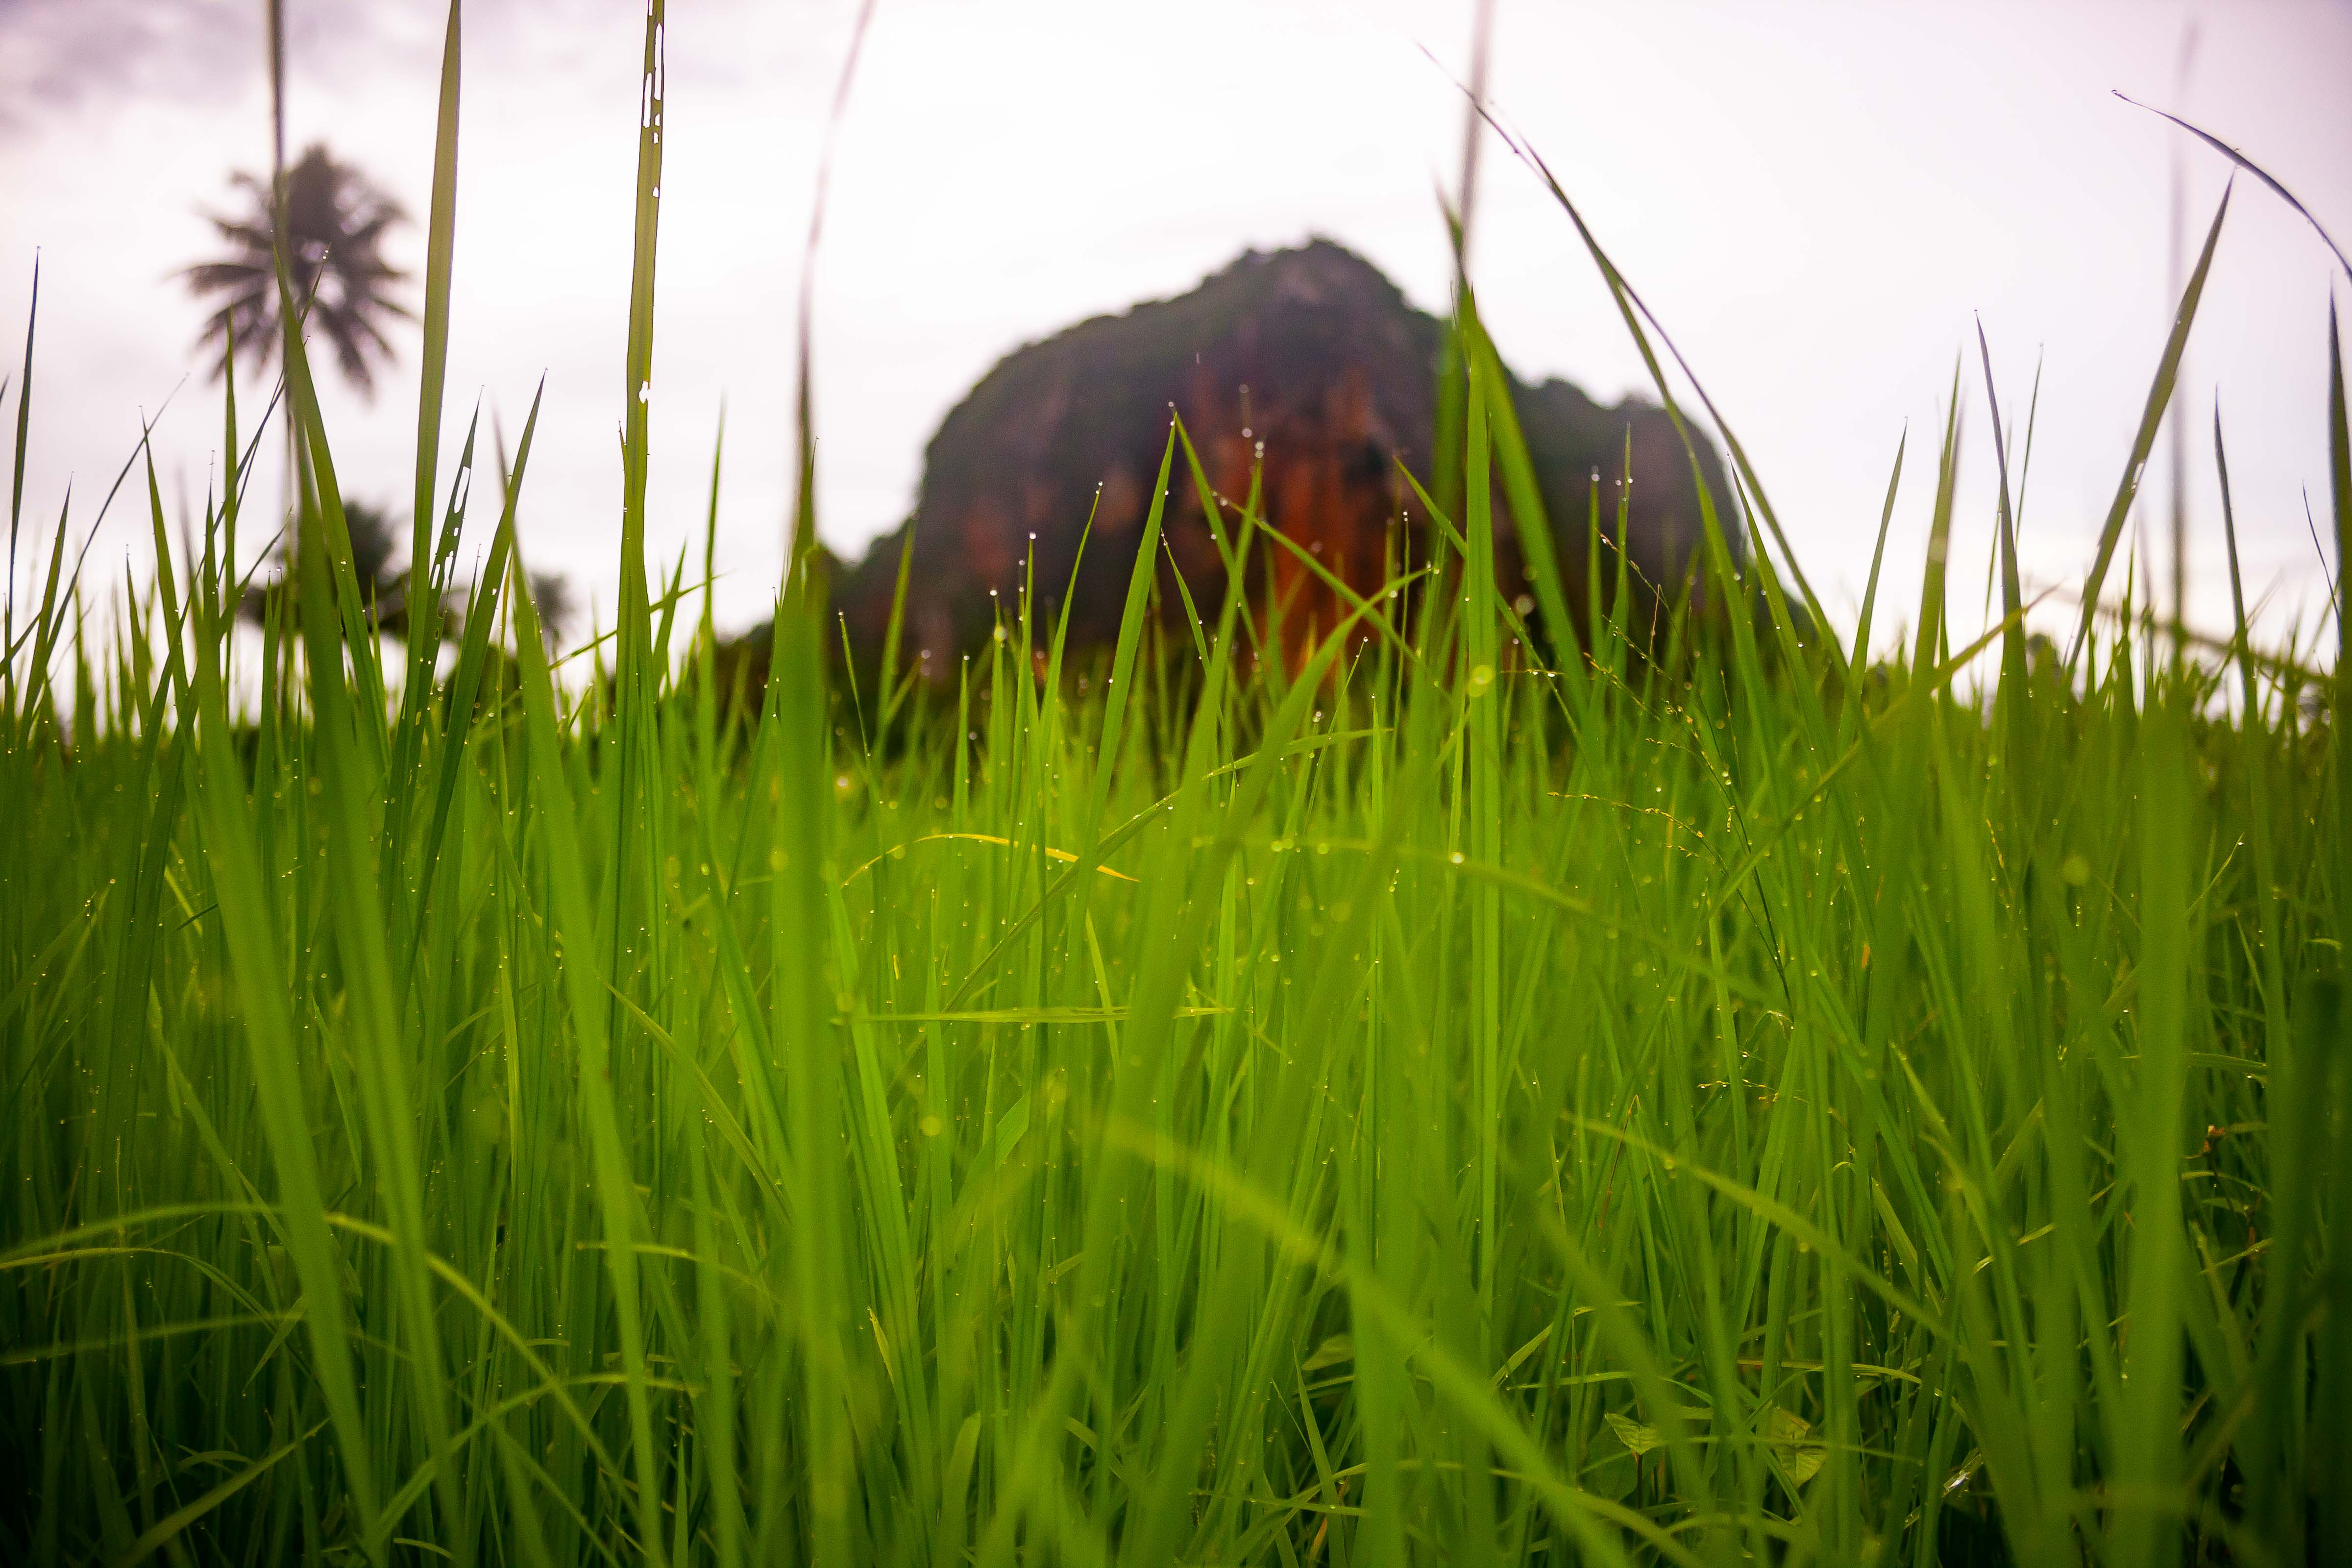 Thailand, Phatthalung Prov, Dew Filled Grass, 2008, IMG 1582